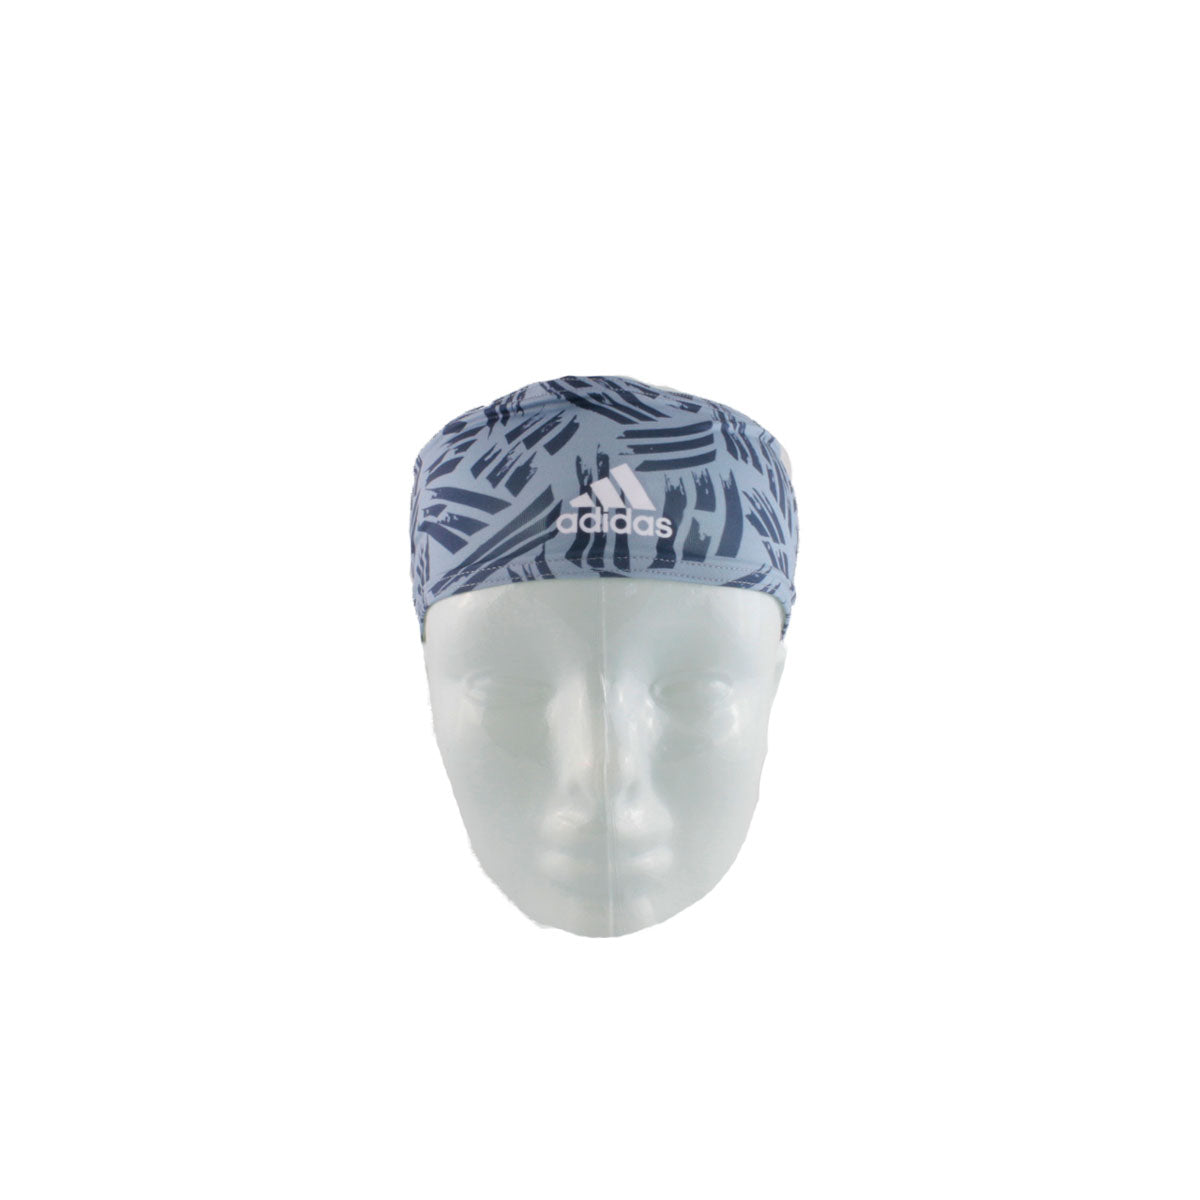 Adidas Headband Light Stirnband Tieband Biathlon Damen Herren Grau CE8405